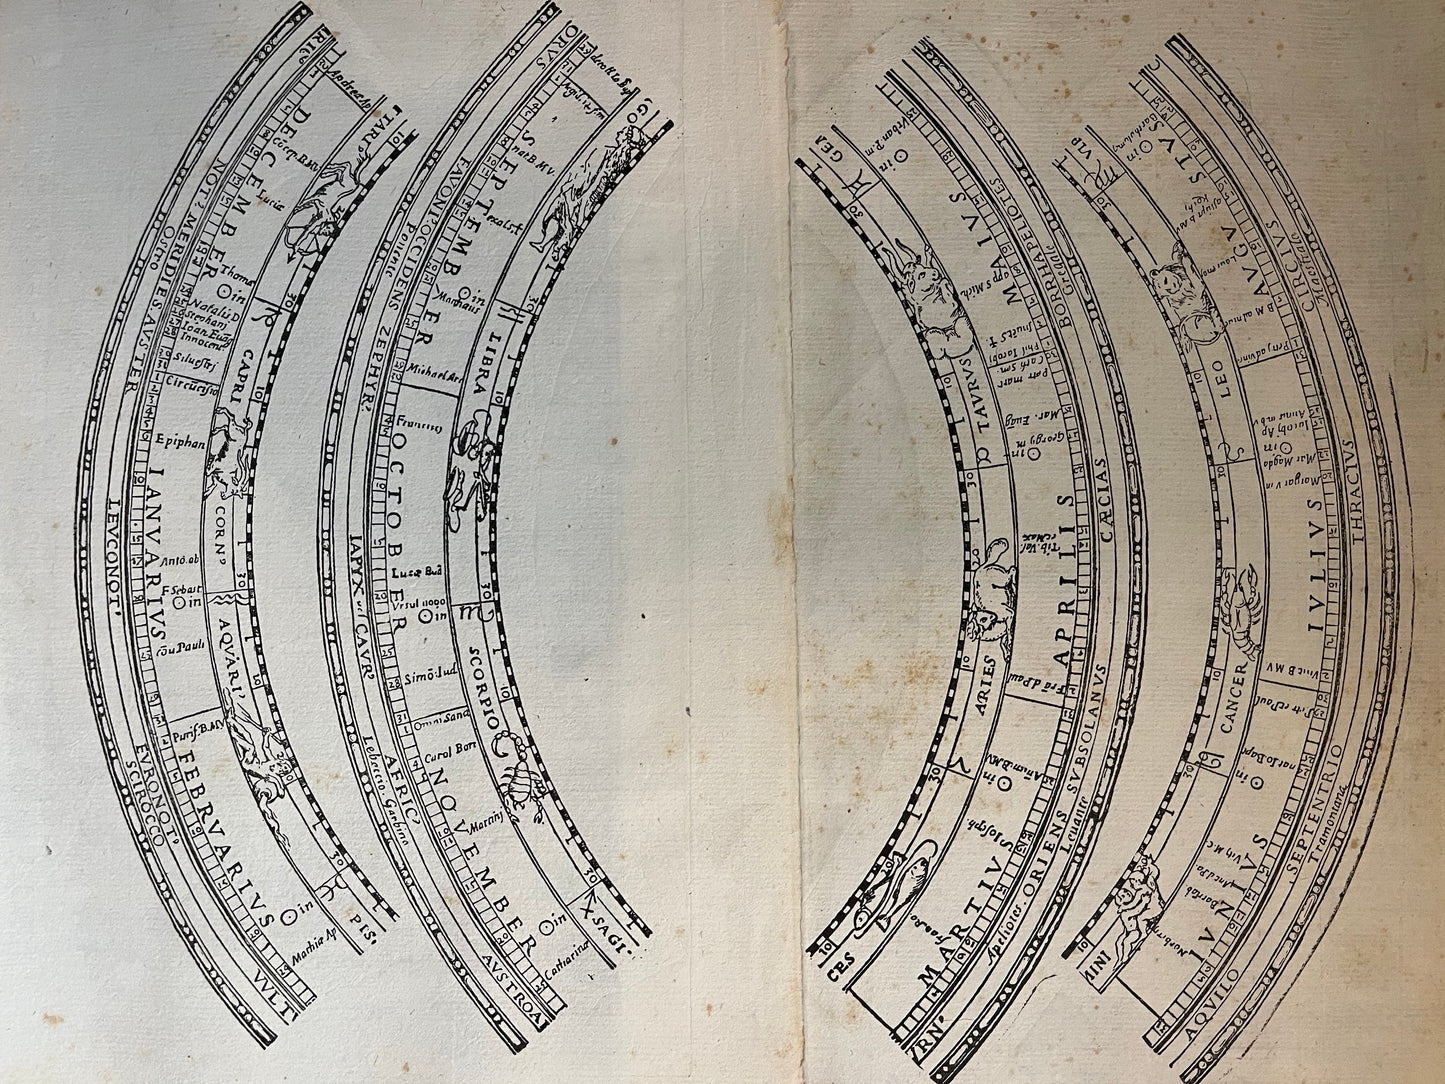 23 Manuscript Celestial Globe Gores - "1626 Auenioni per Matheum Greuteru. Sculpt. exeudebat Gulielmus Nicolai C. Sauary. et B. Gaullier exeudit" - Matthaeus Greuter